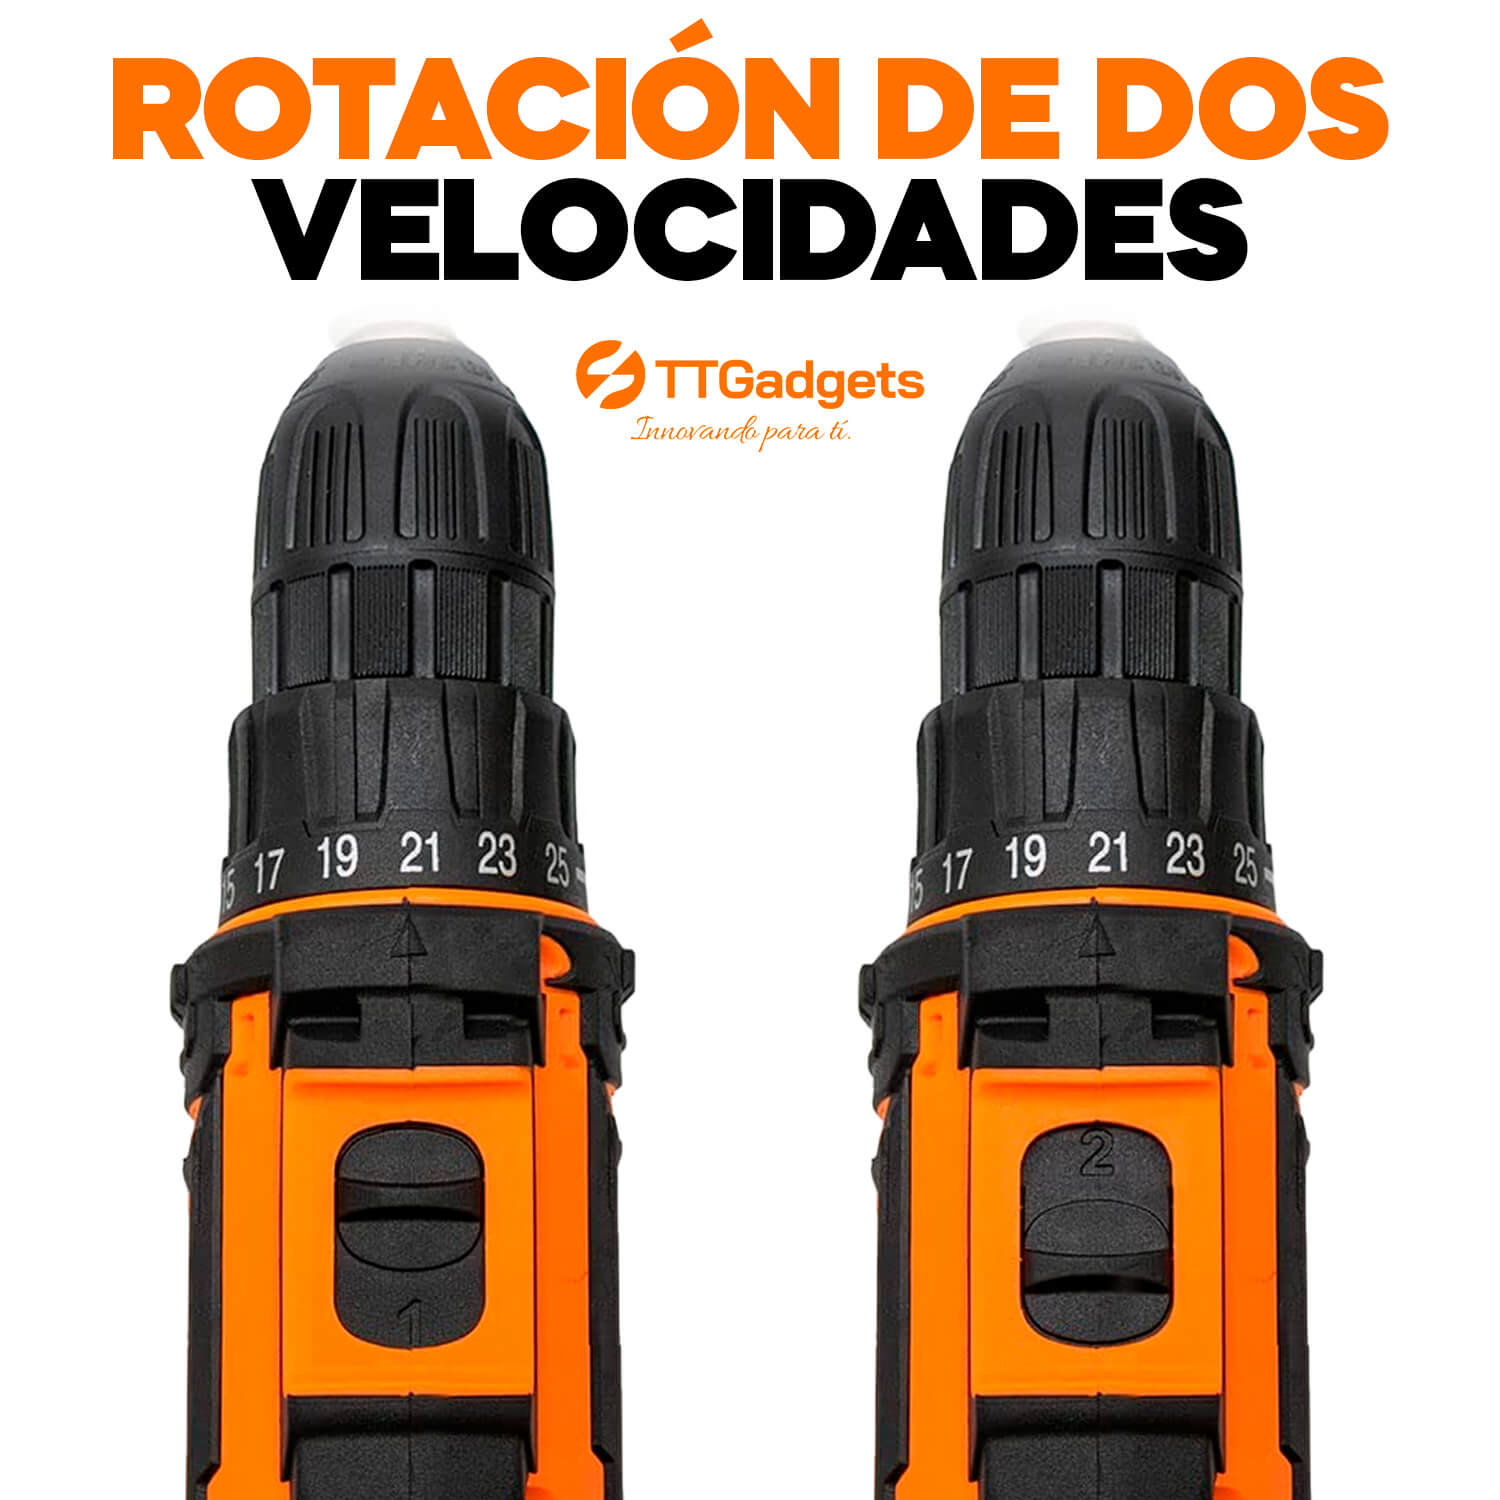 Kit de Taladro Inalámbrico con Batería Recargable: Potente Herramienta para Atornillar y Perforar - Kit de Accesorios Incluidos | 30 días garantía